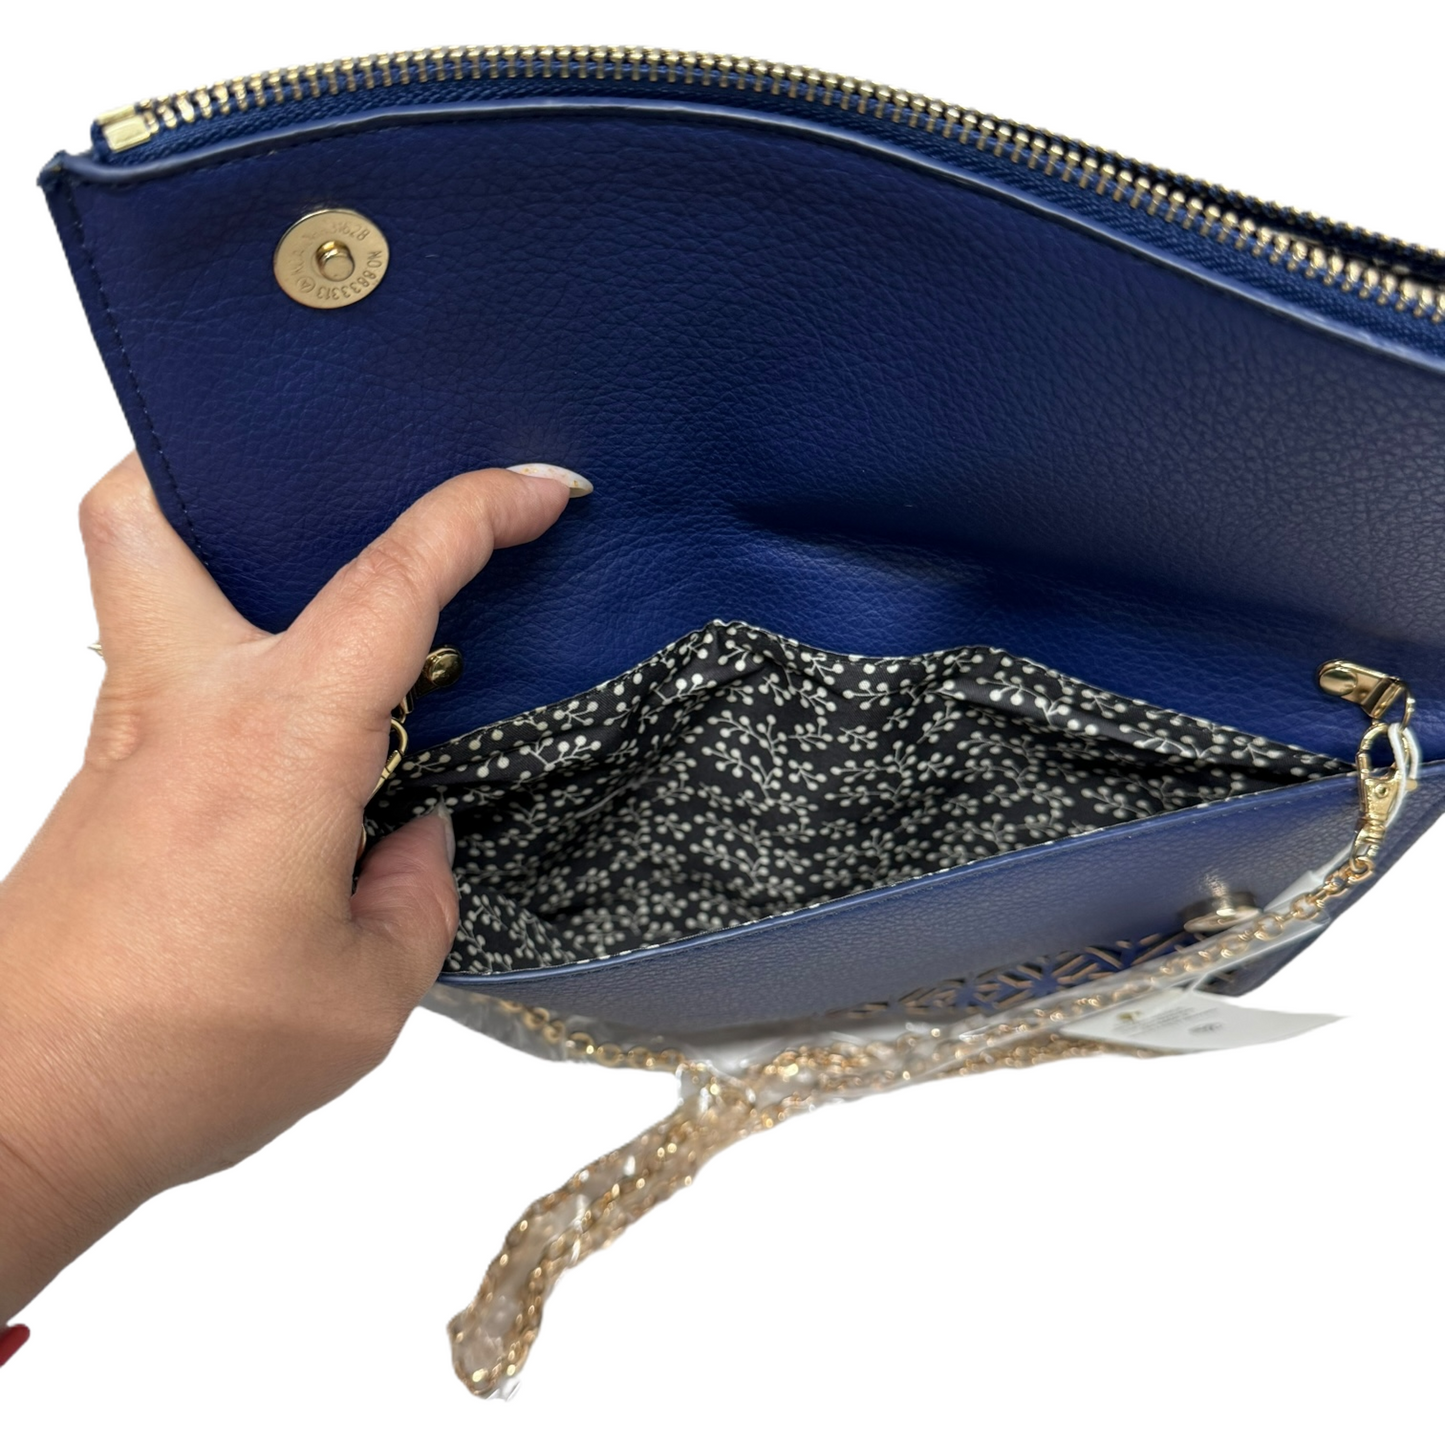 Handbag By Urban Expressions  Size: Medium